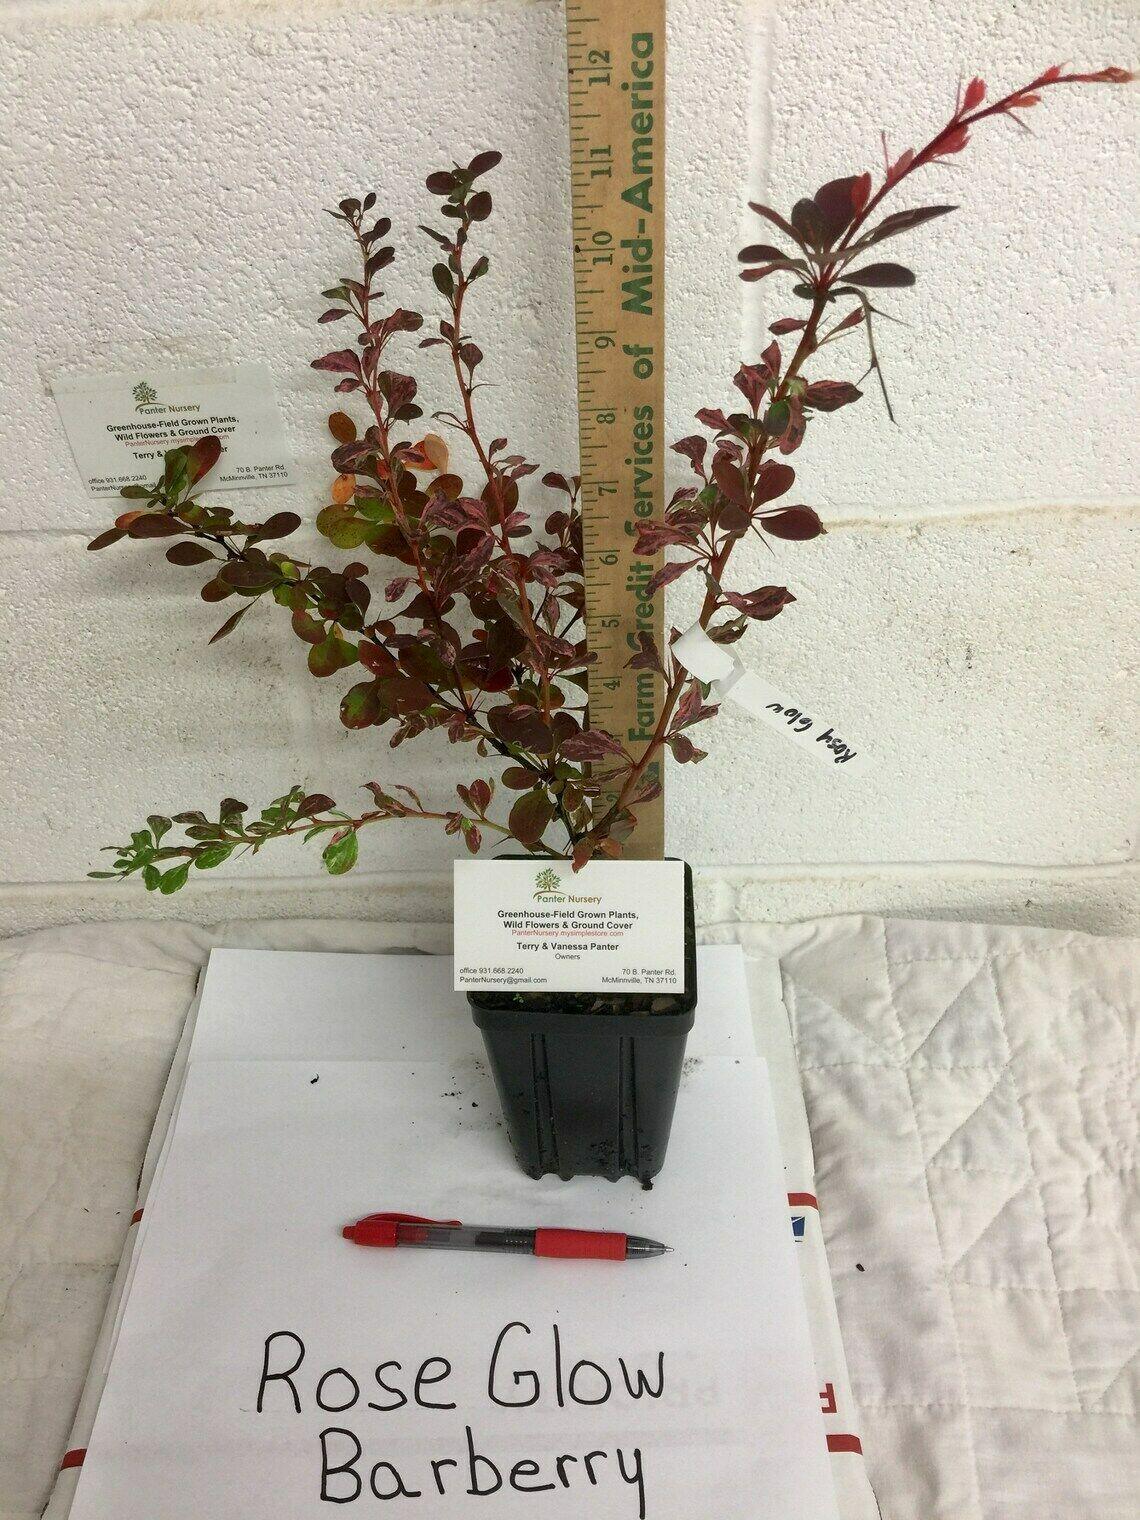 Rose Glow Barberry Shrub, 6-12" Tall Live Plant, Berberis thunbergii 'Rose Glow' - The Nursery Center